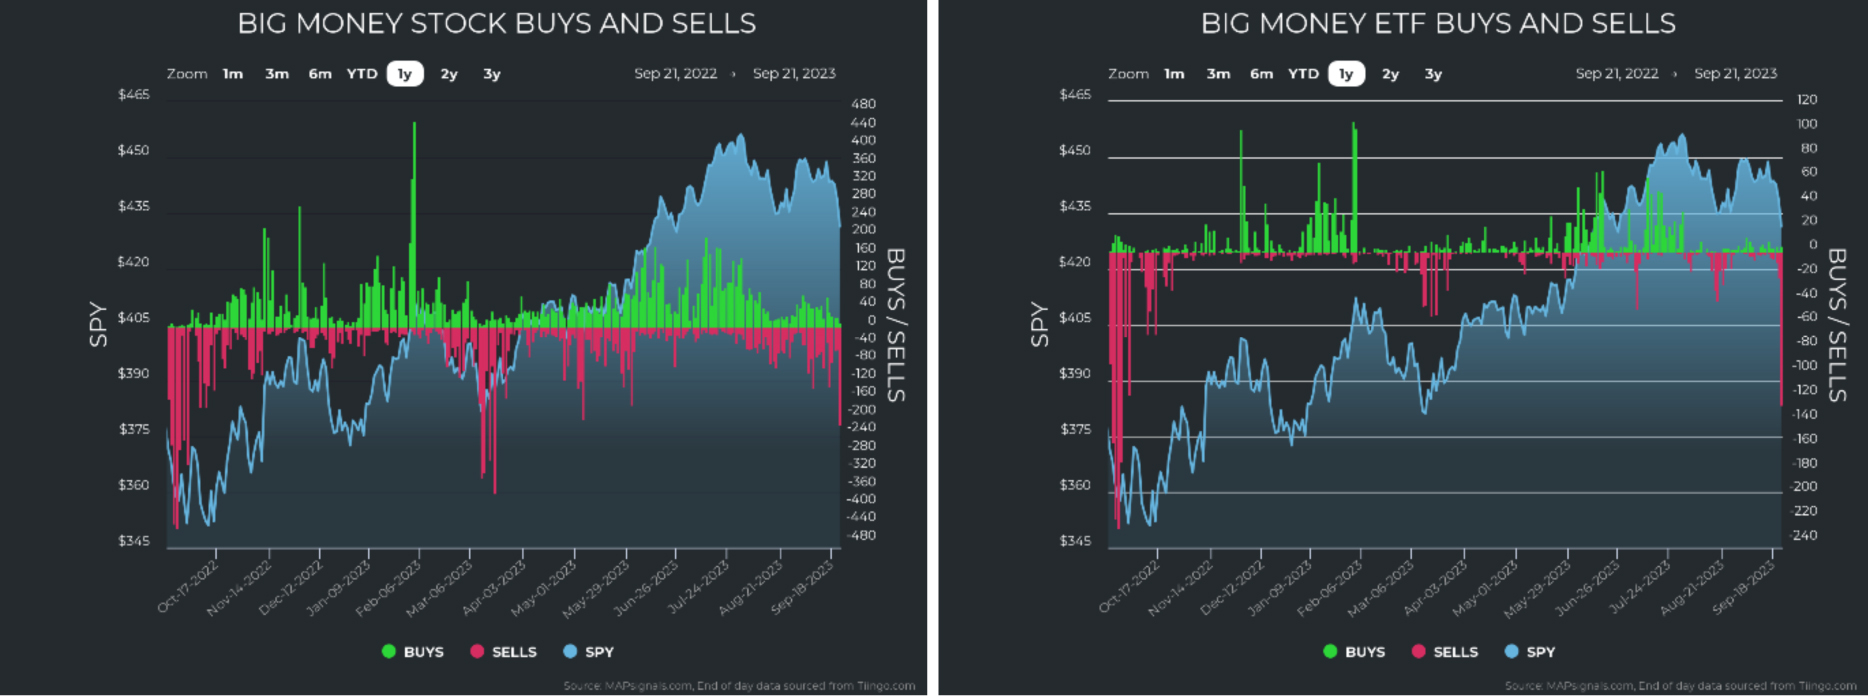 Big Money Stock ETF Charts